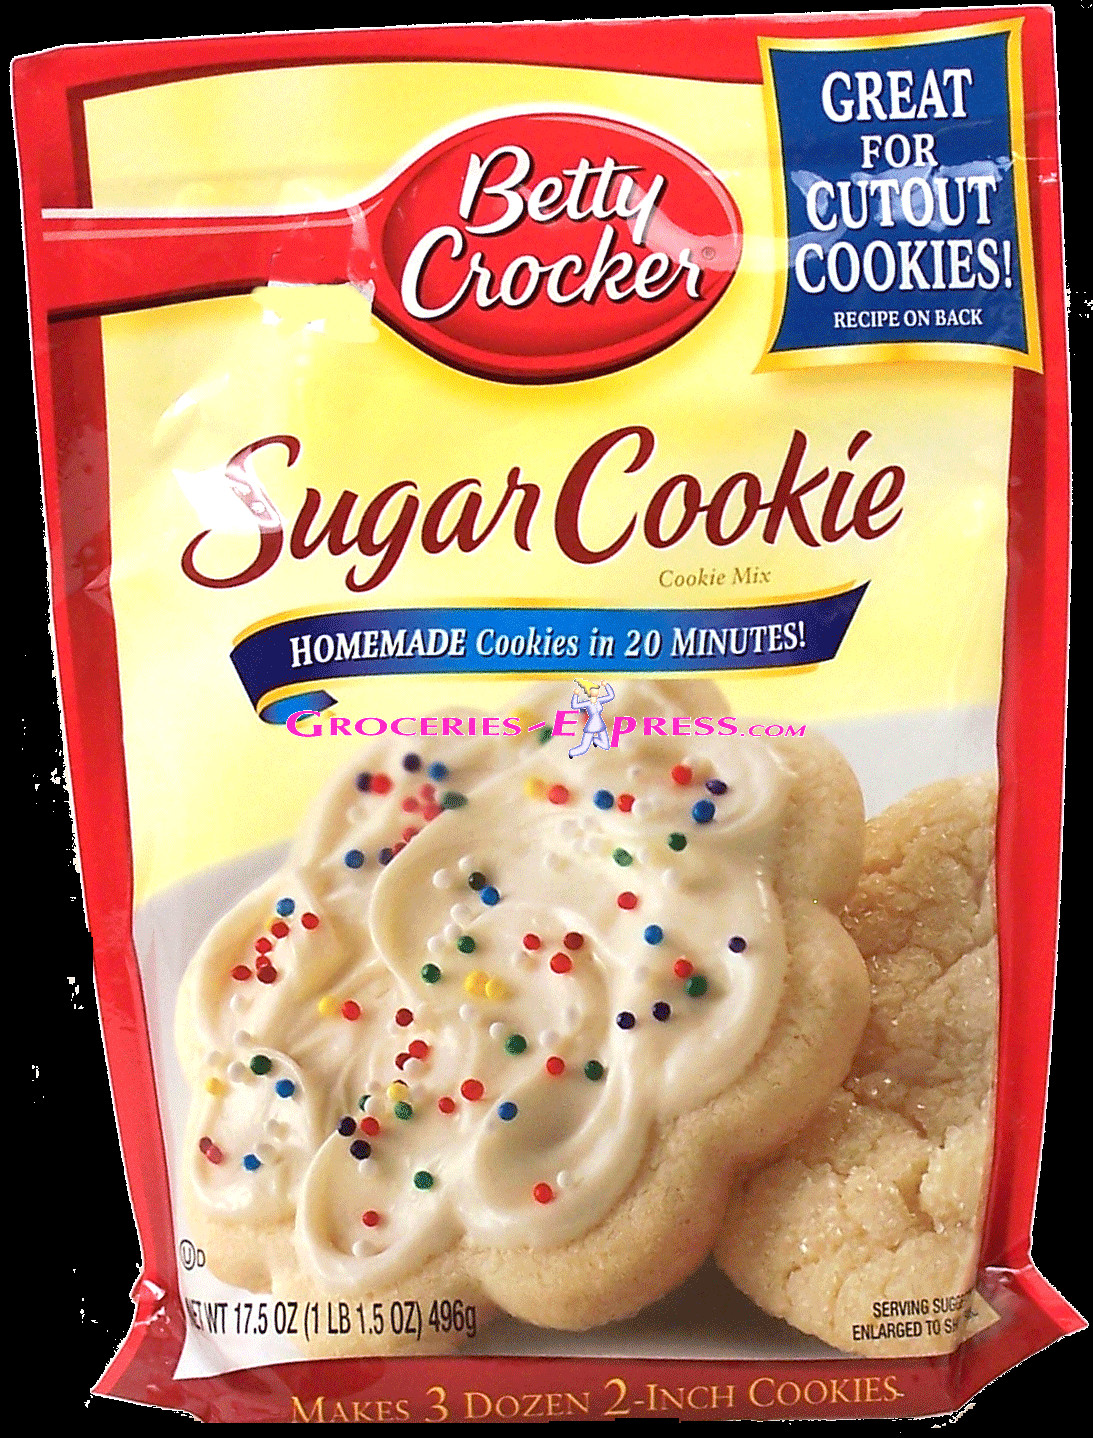 Betty Crocker Sugar Cookies
 betty crocker sugar cookie mix